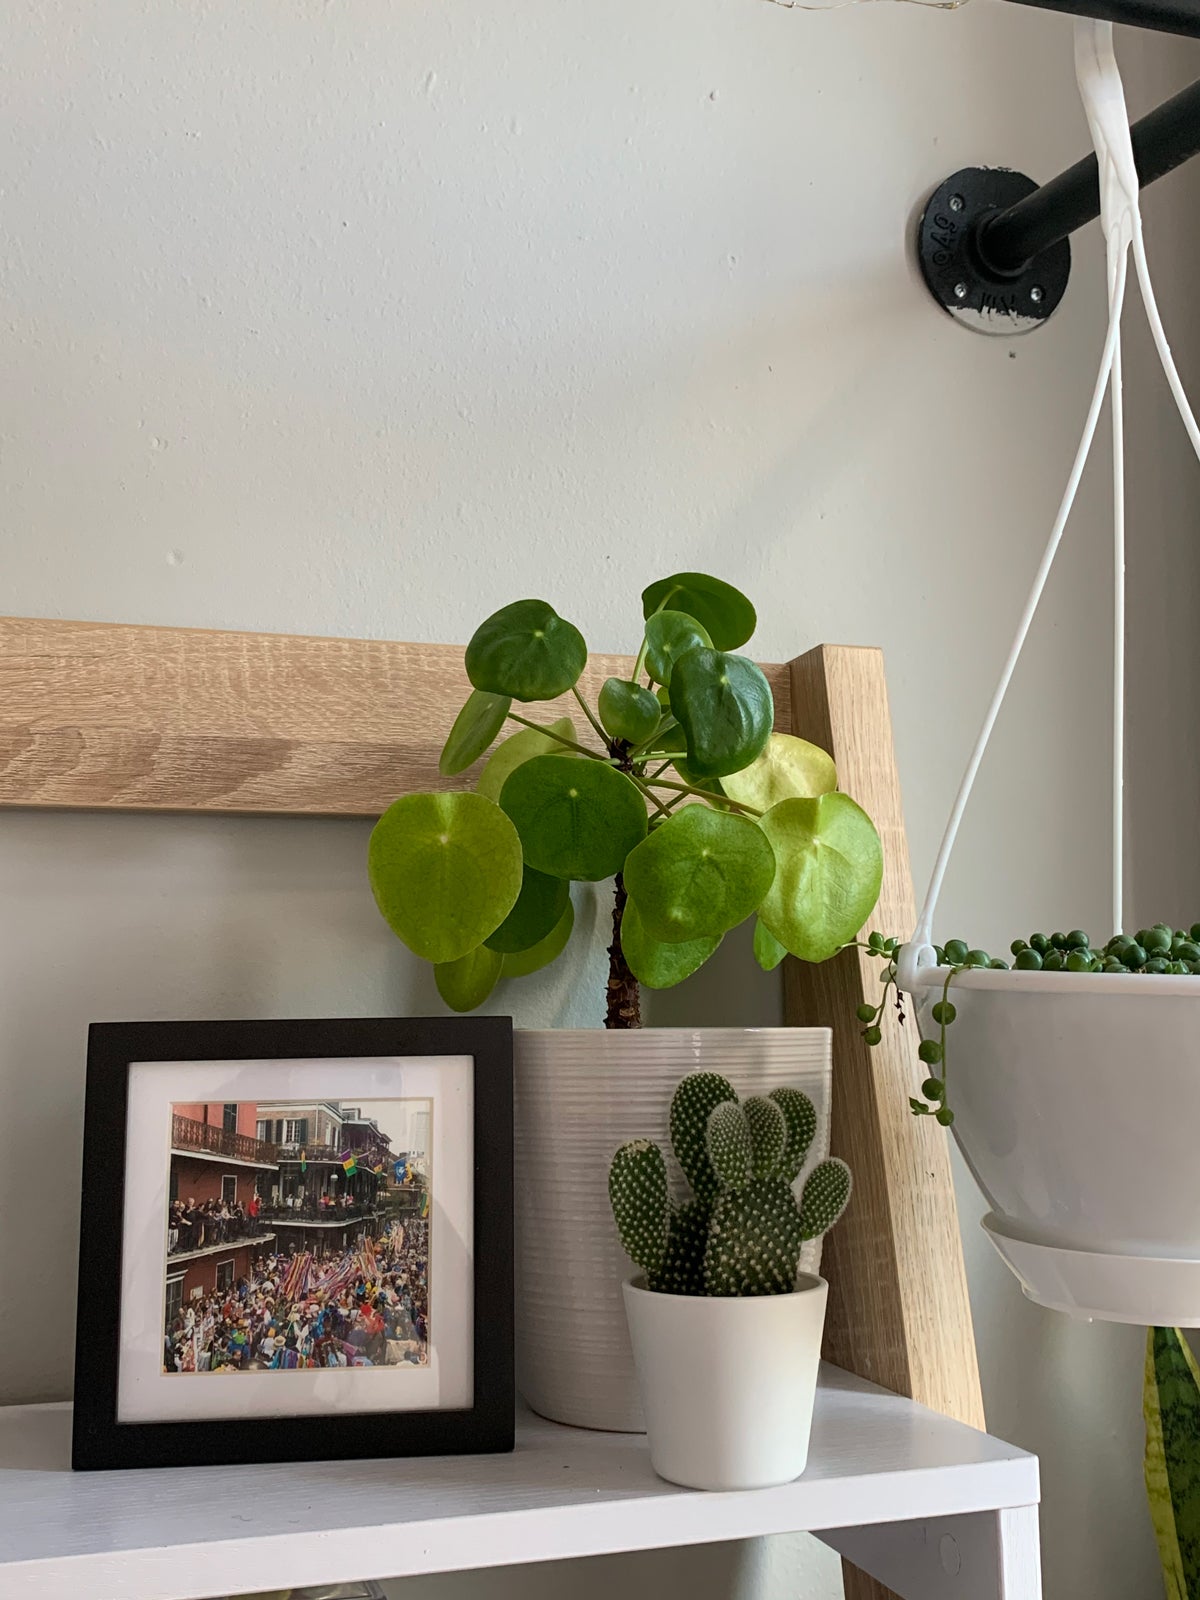 Photo frame on shelf next to potted plants